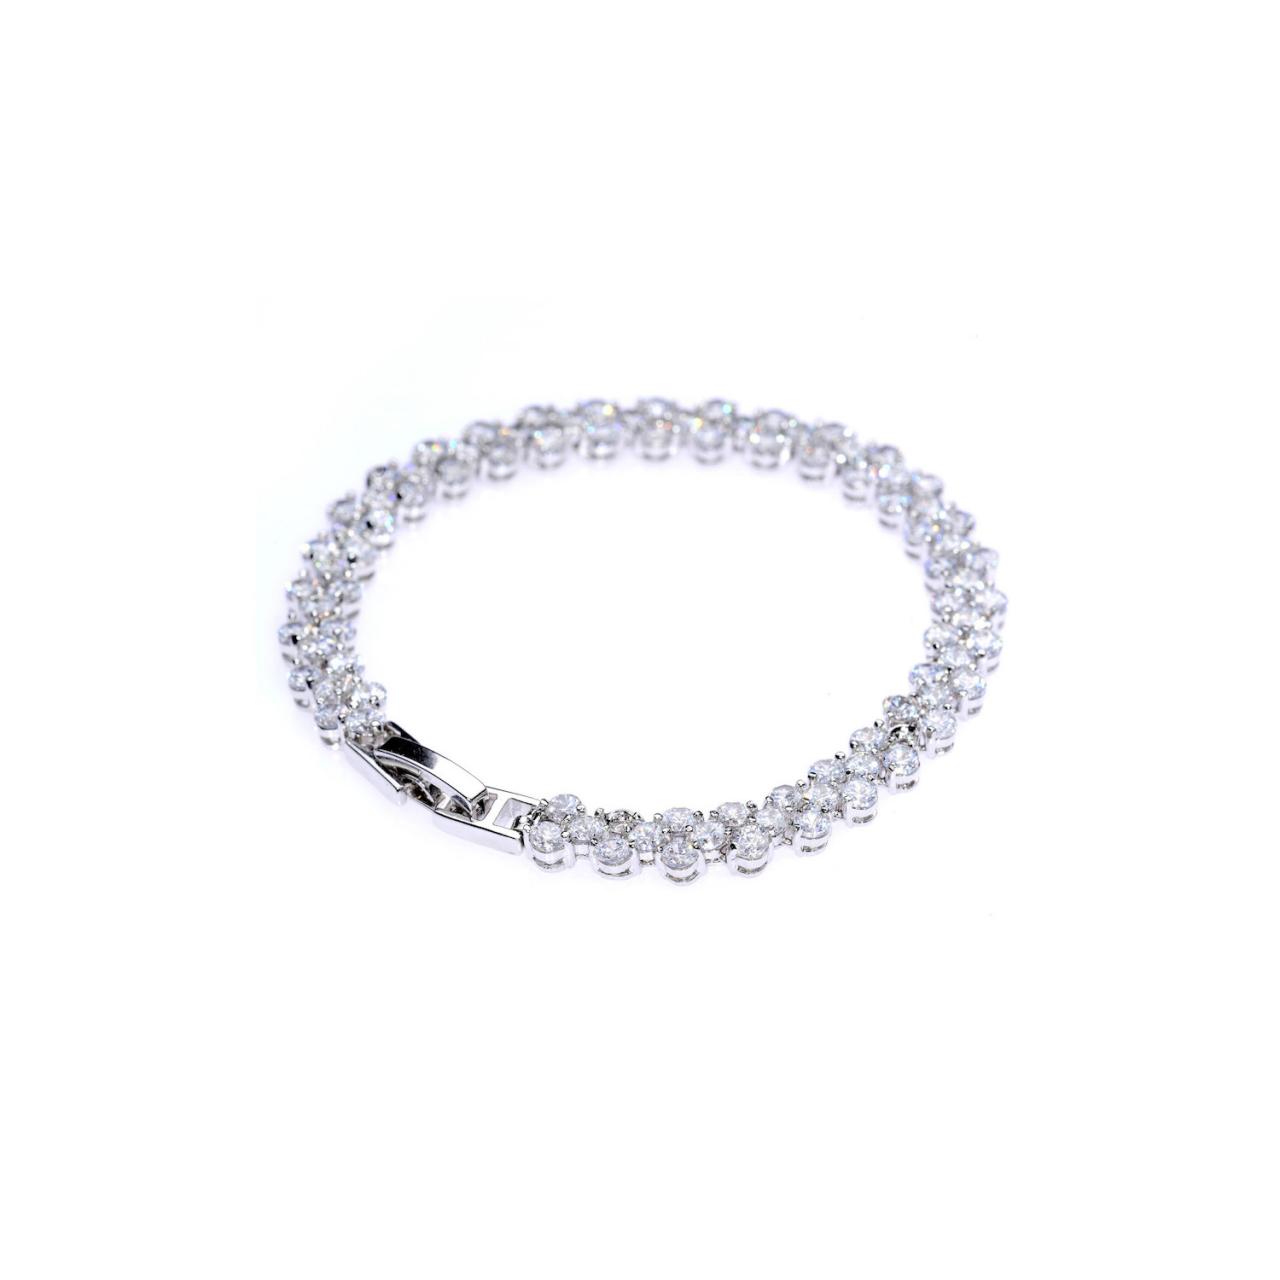 Eternity Bracelet / Tennis Bracelet / Delicate Bracelet / Silver Bracelet / Crystal Jewelry / Elegant Jewelry / Bridesmaid Bracelet / Gift